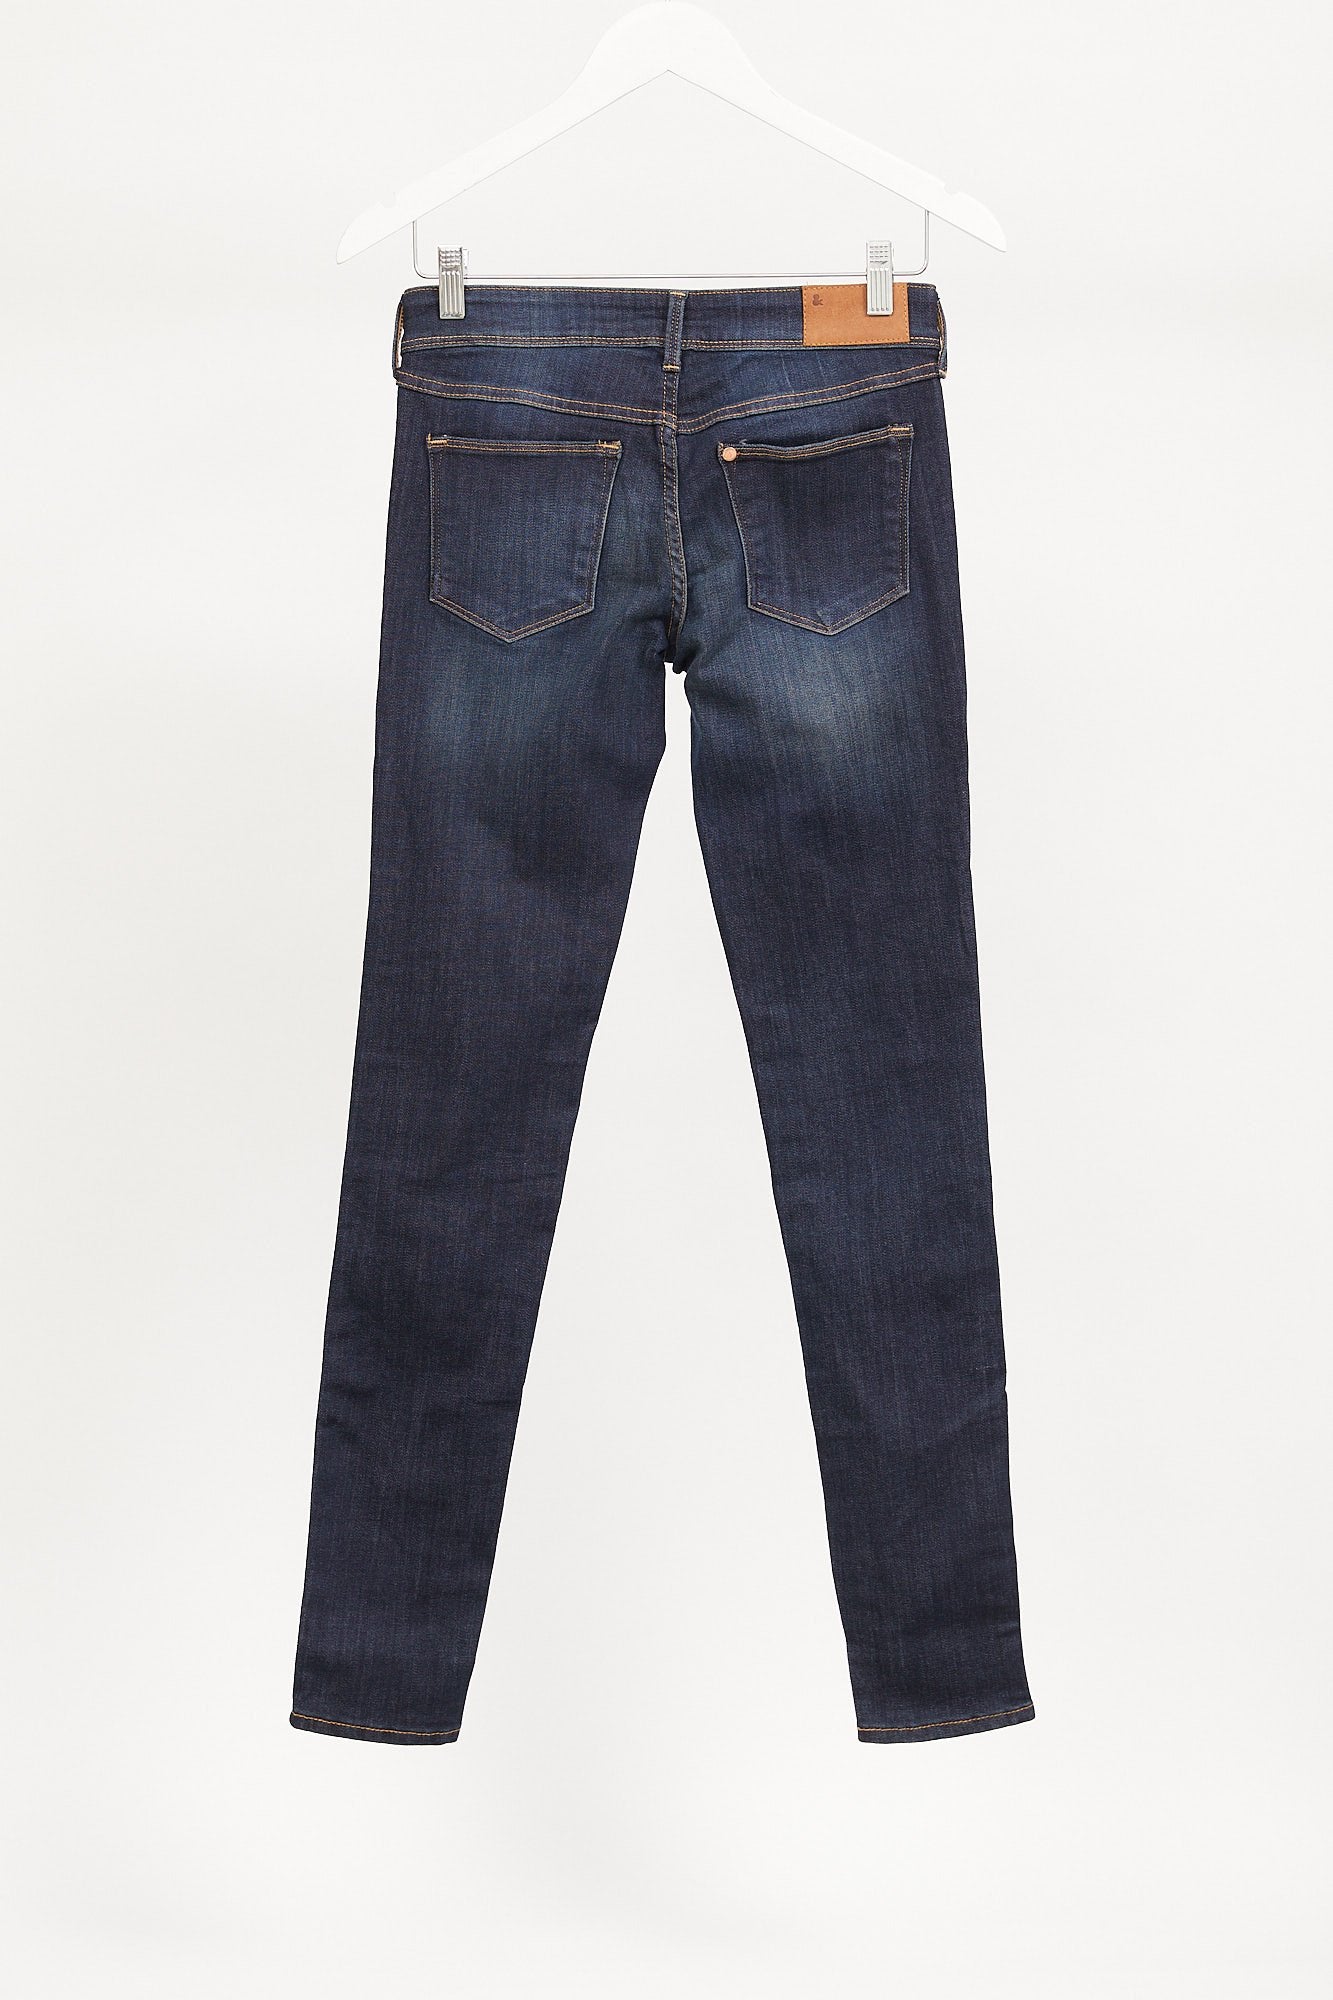 Womens Dark Blue Jeans: Size Small 28 x 32